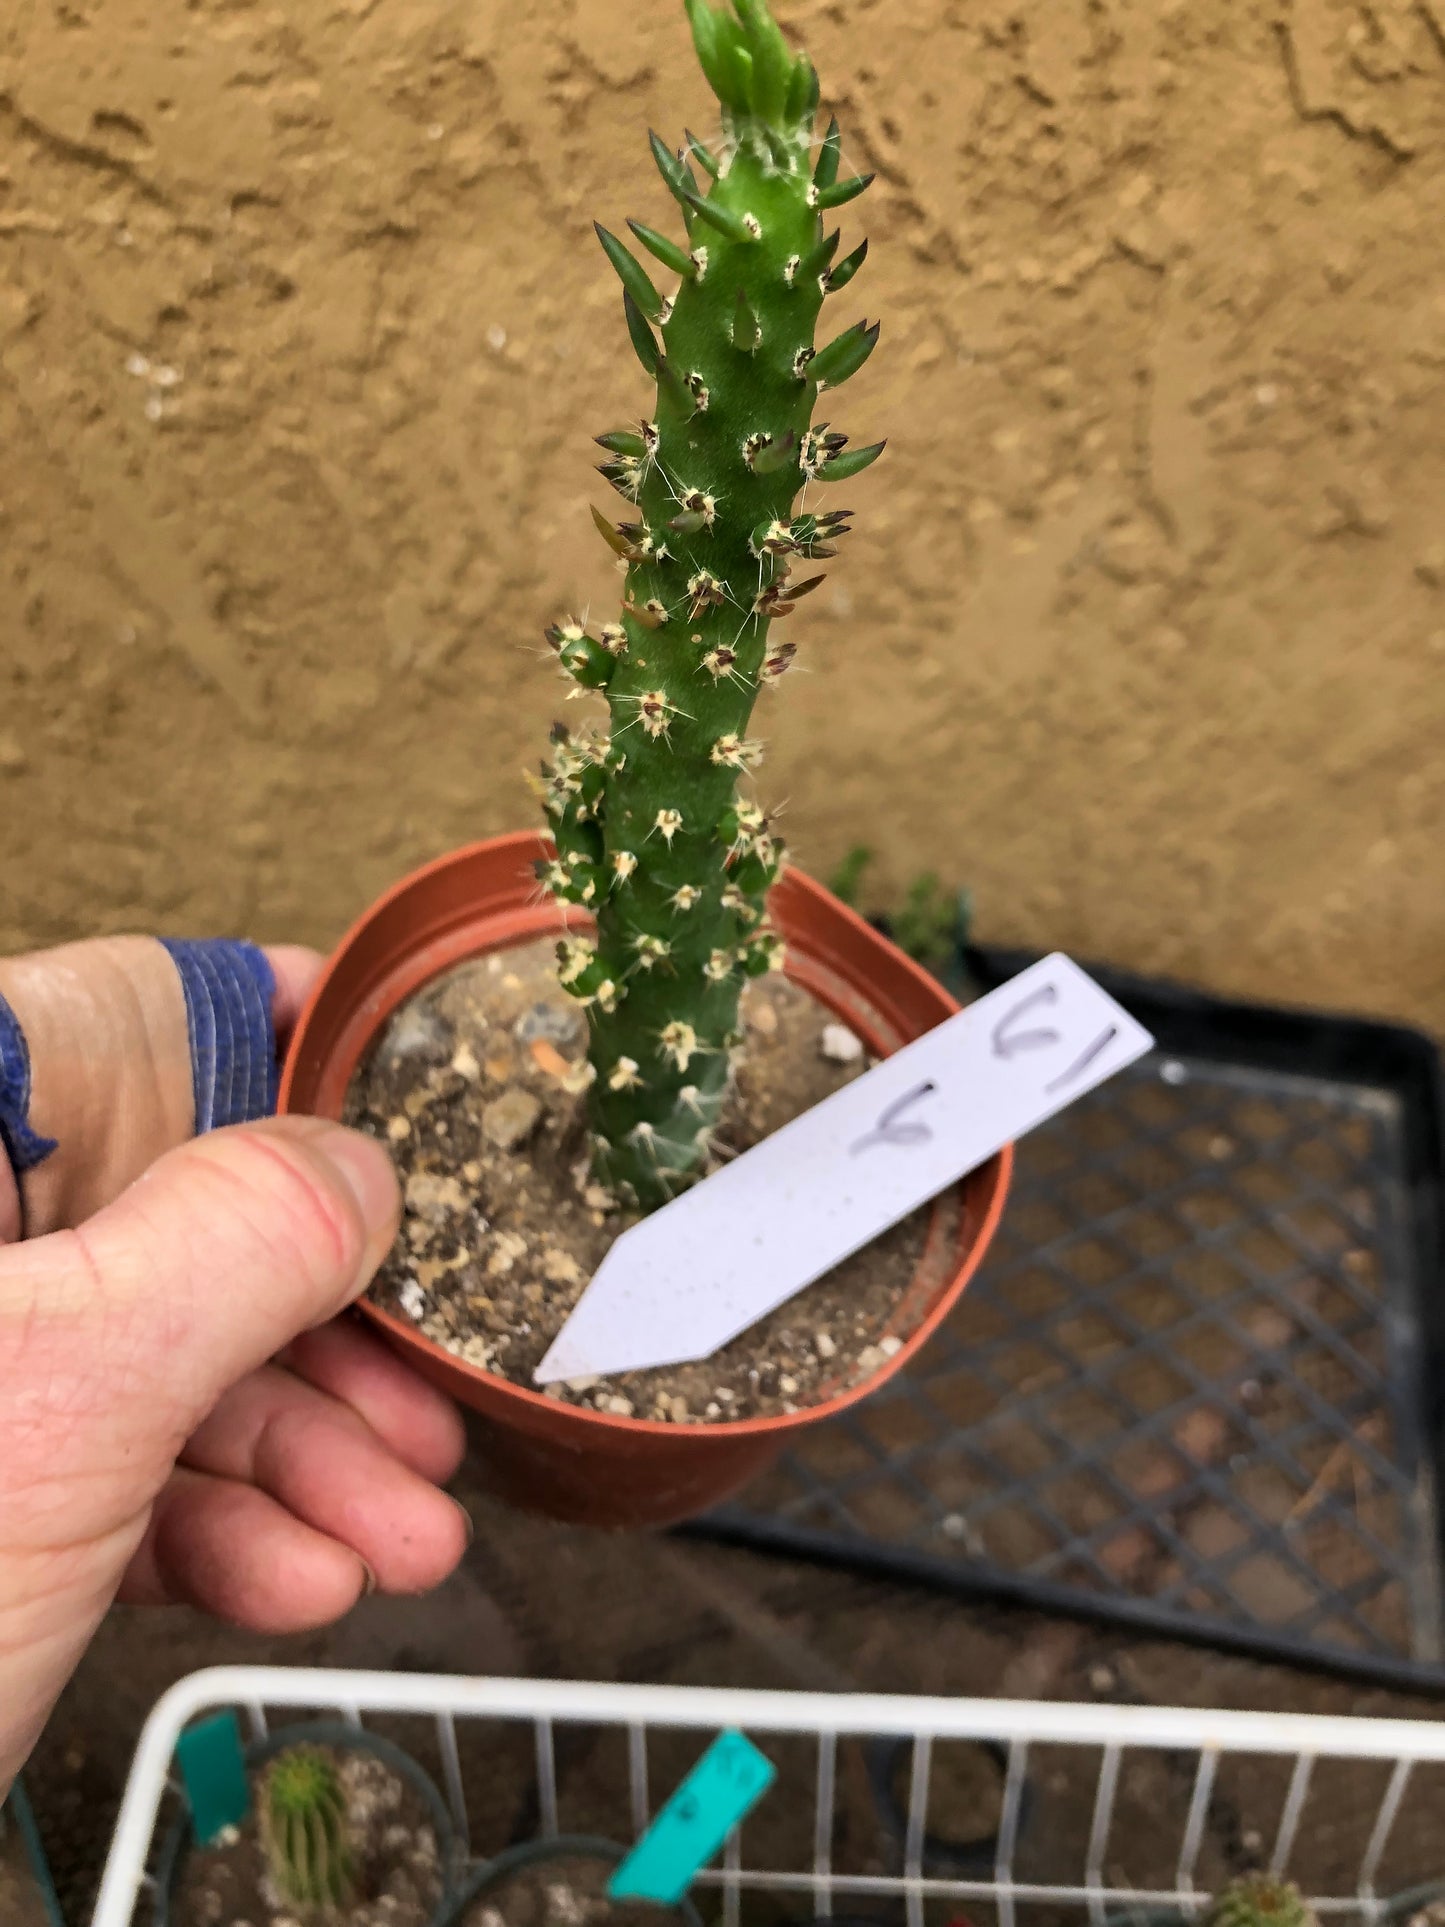 Austrocylindropuntia Cactus Gumbi Mini Eve's Needle 6"Tall #61W